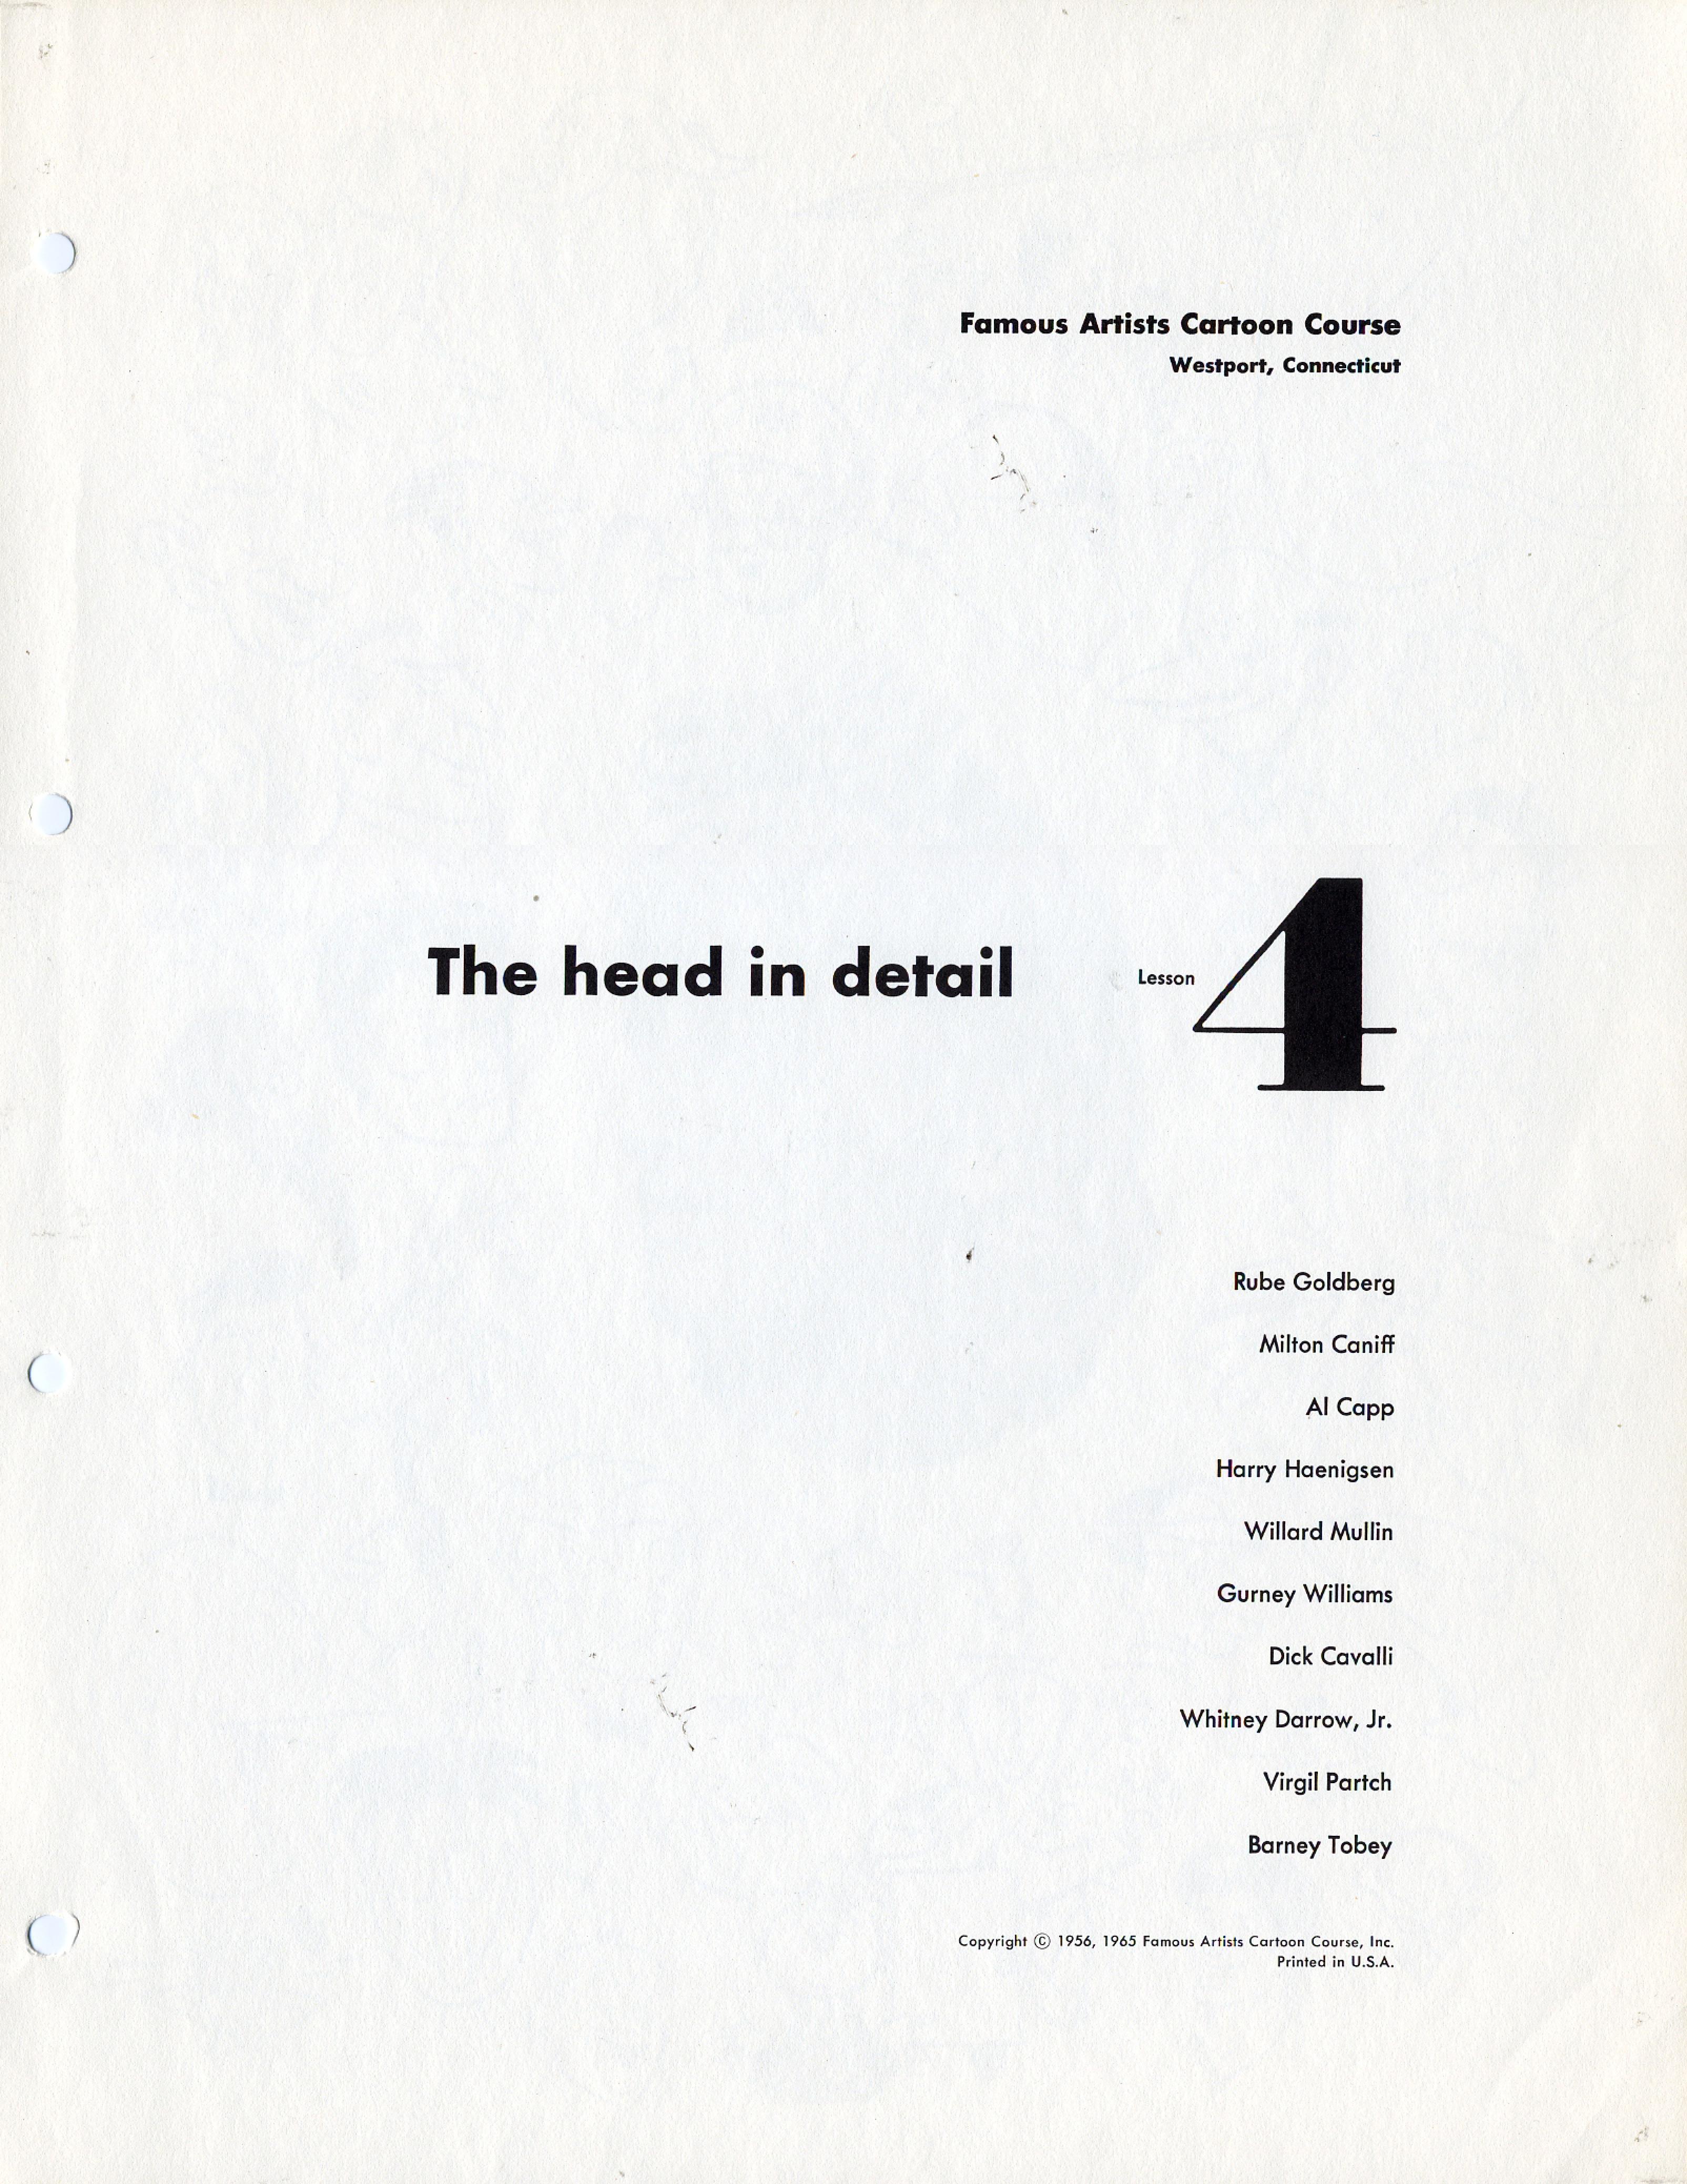 Ch 4: The Head in Detail (FACC)